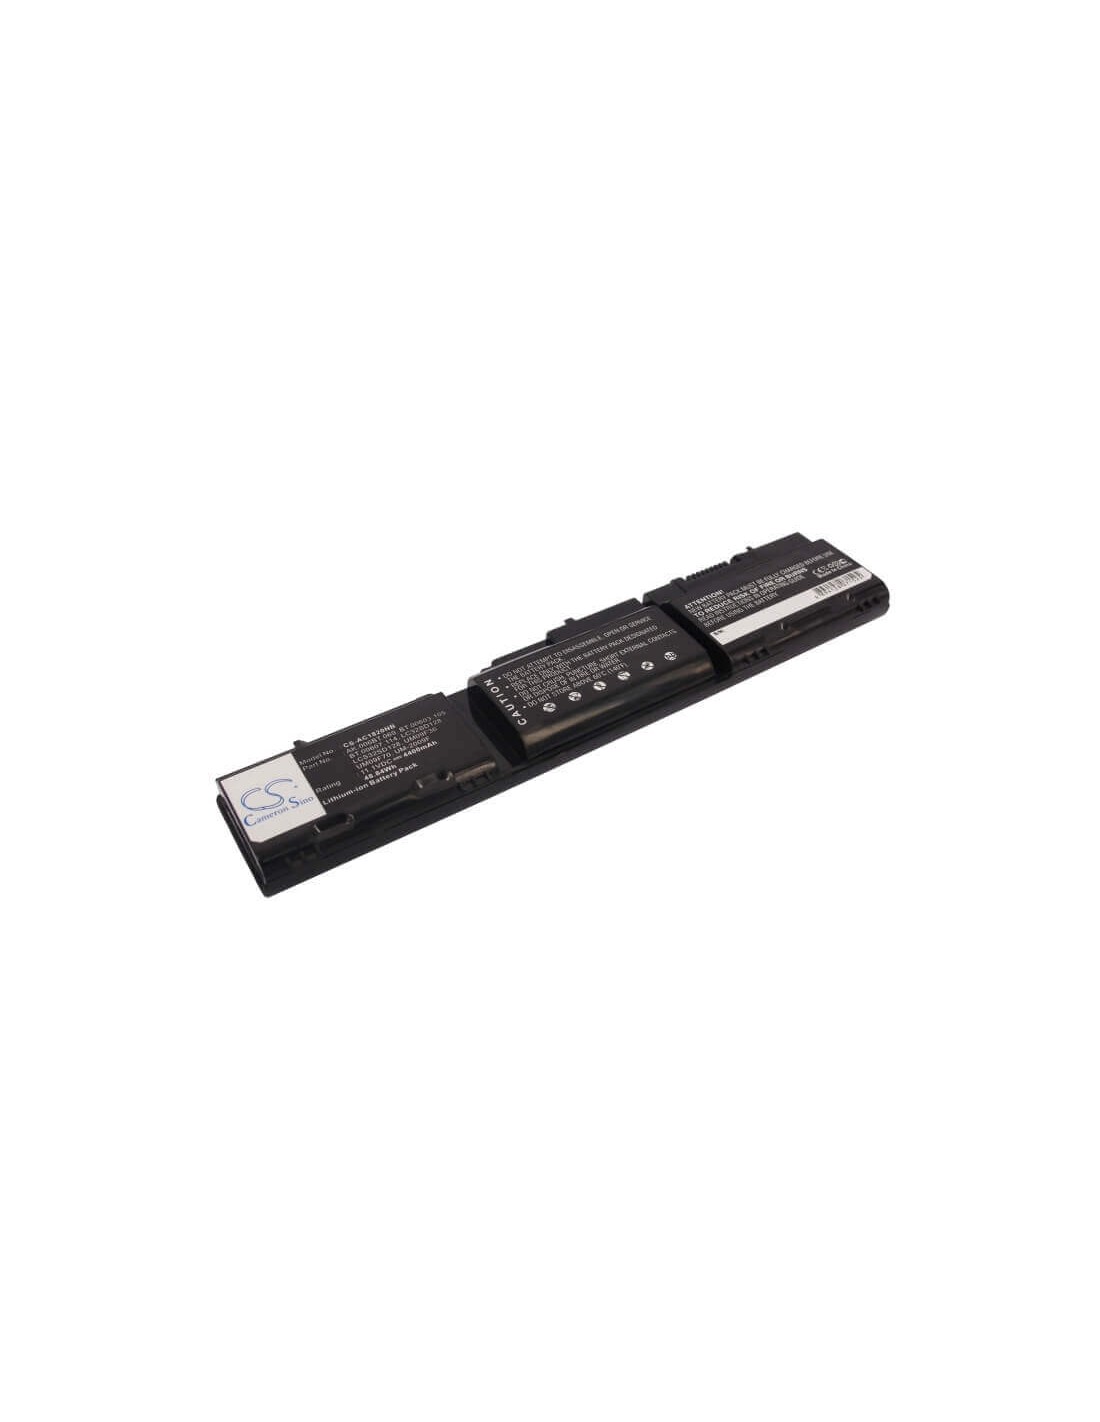 Black Battery for Acer Aspire 1820, Aspire 1420p, Aspire 1820pt 11.1V, 4400mAh - 48.84Wh